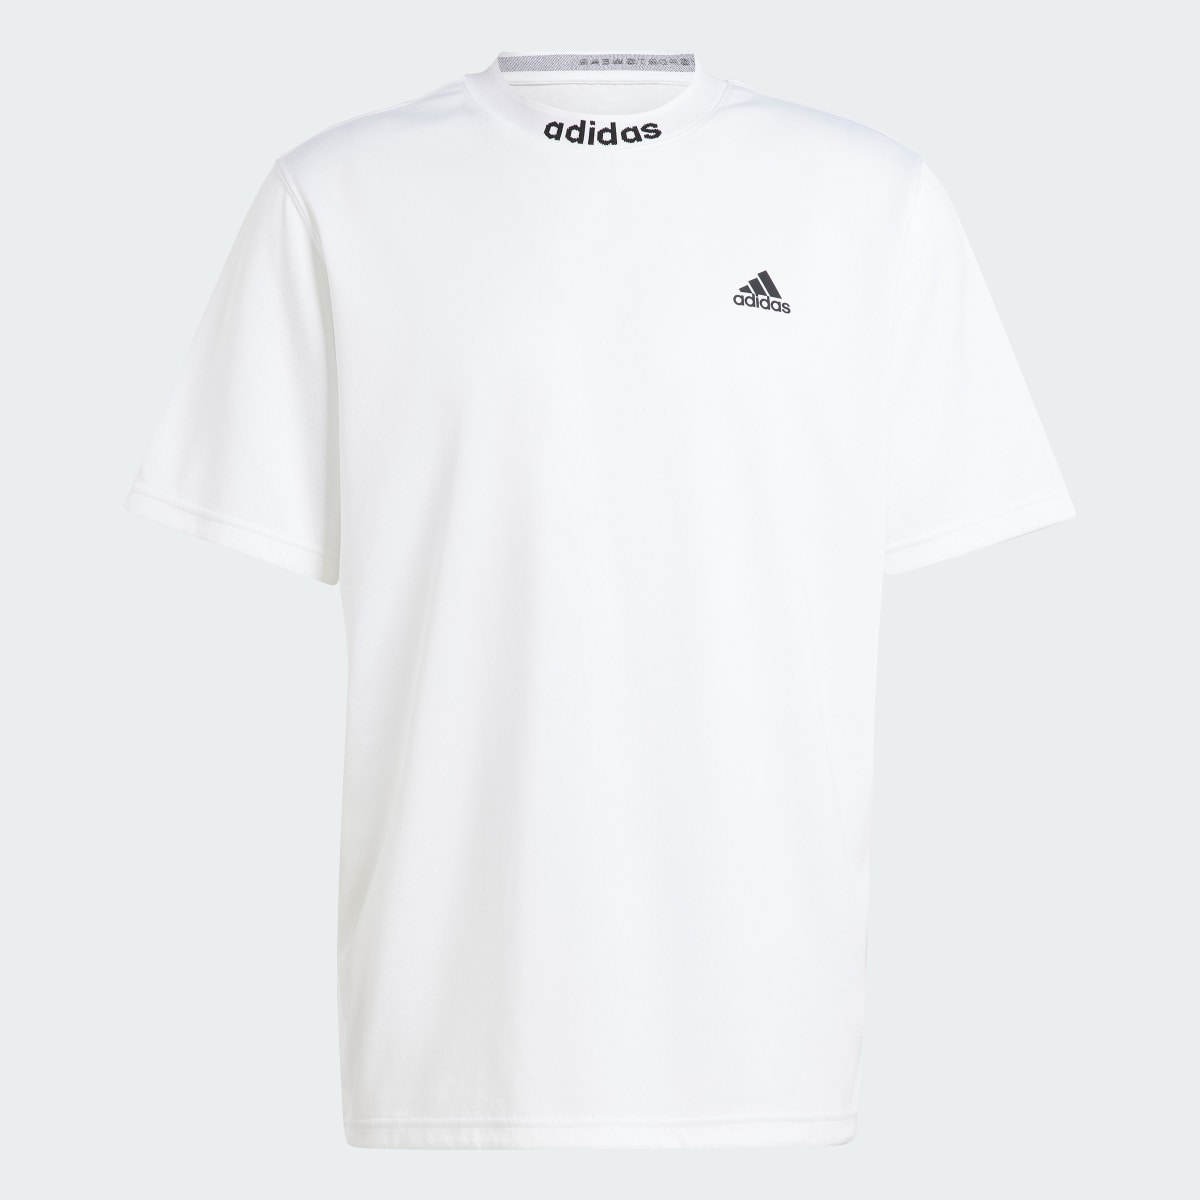 Adidas T-shirt Mesh-Back. 5